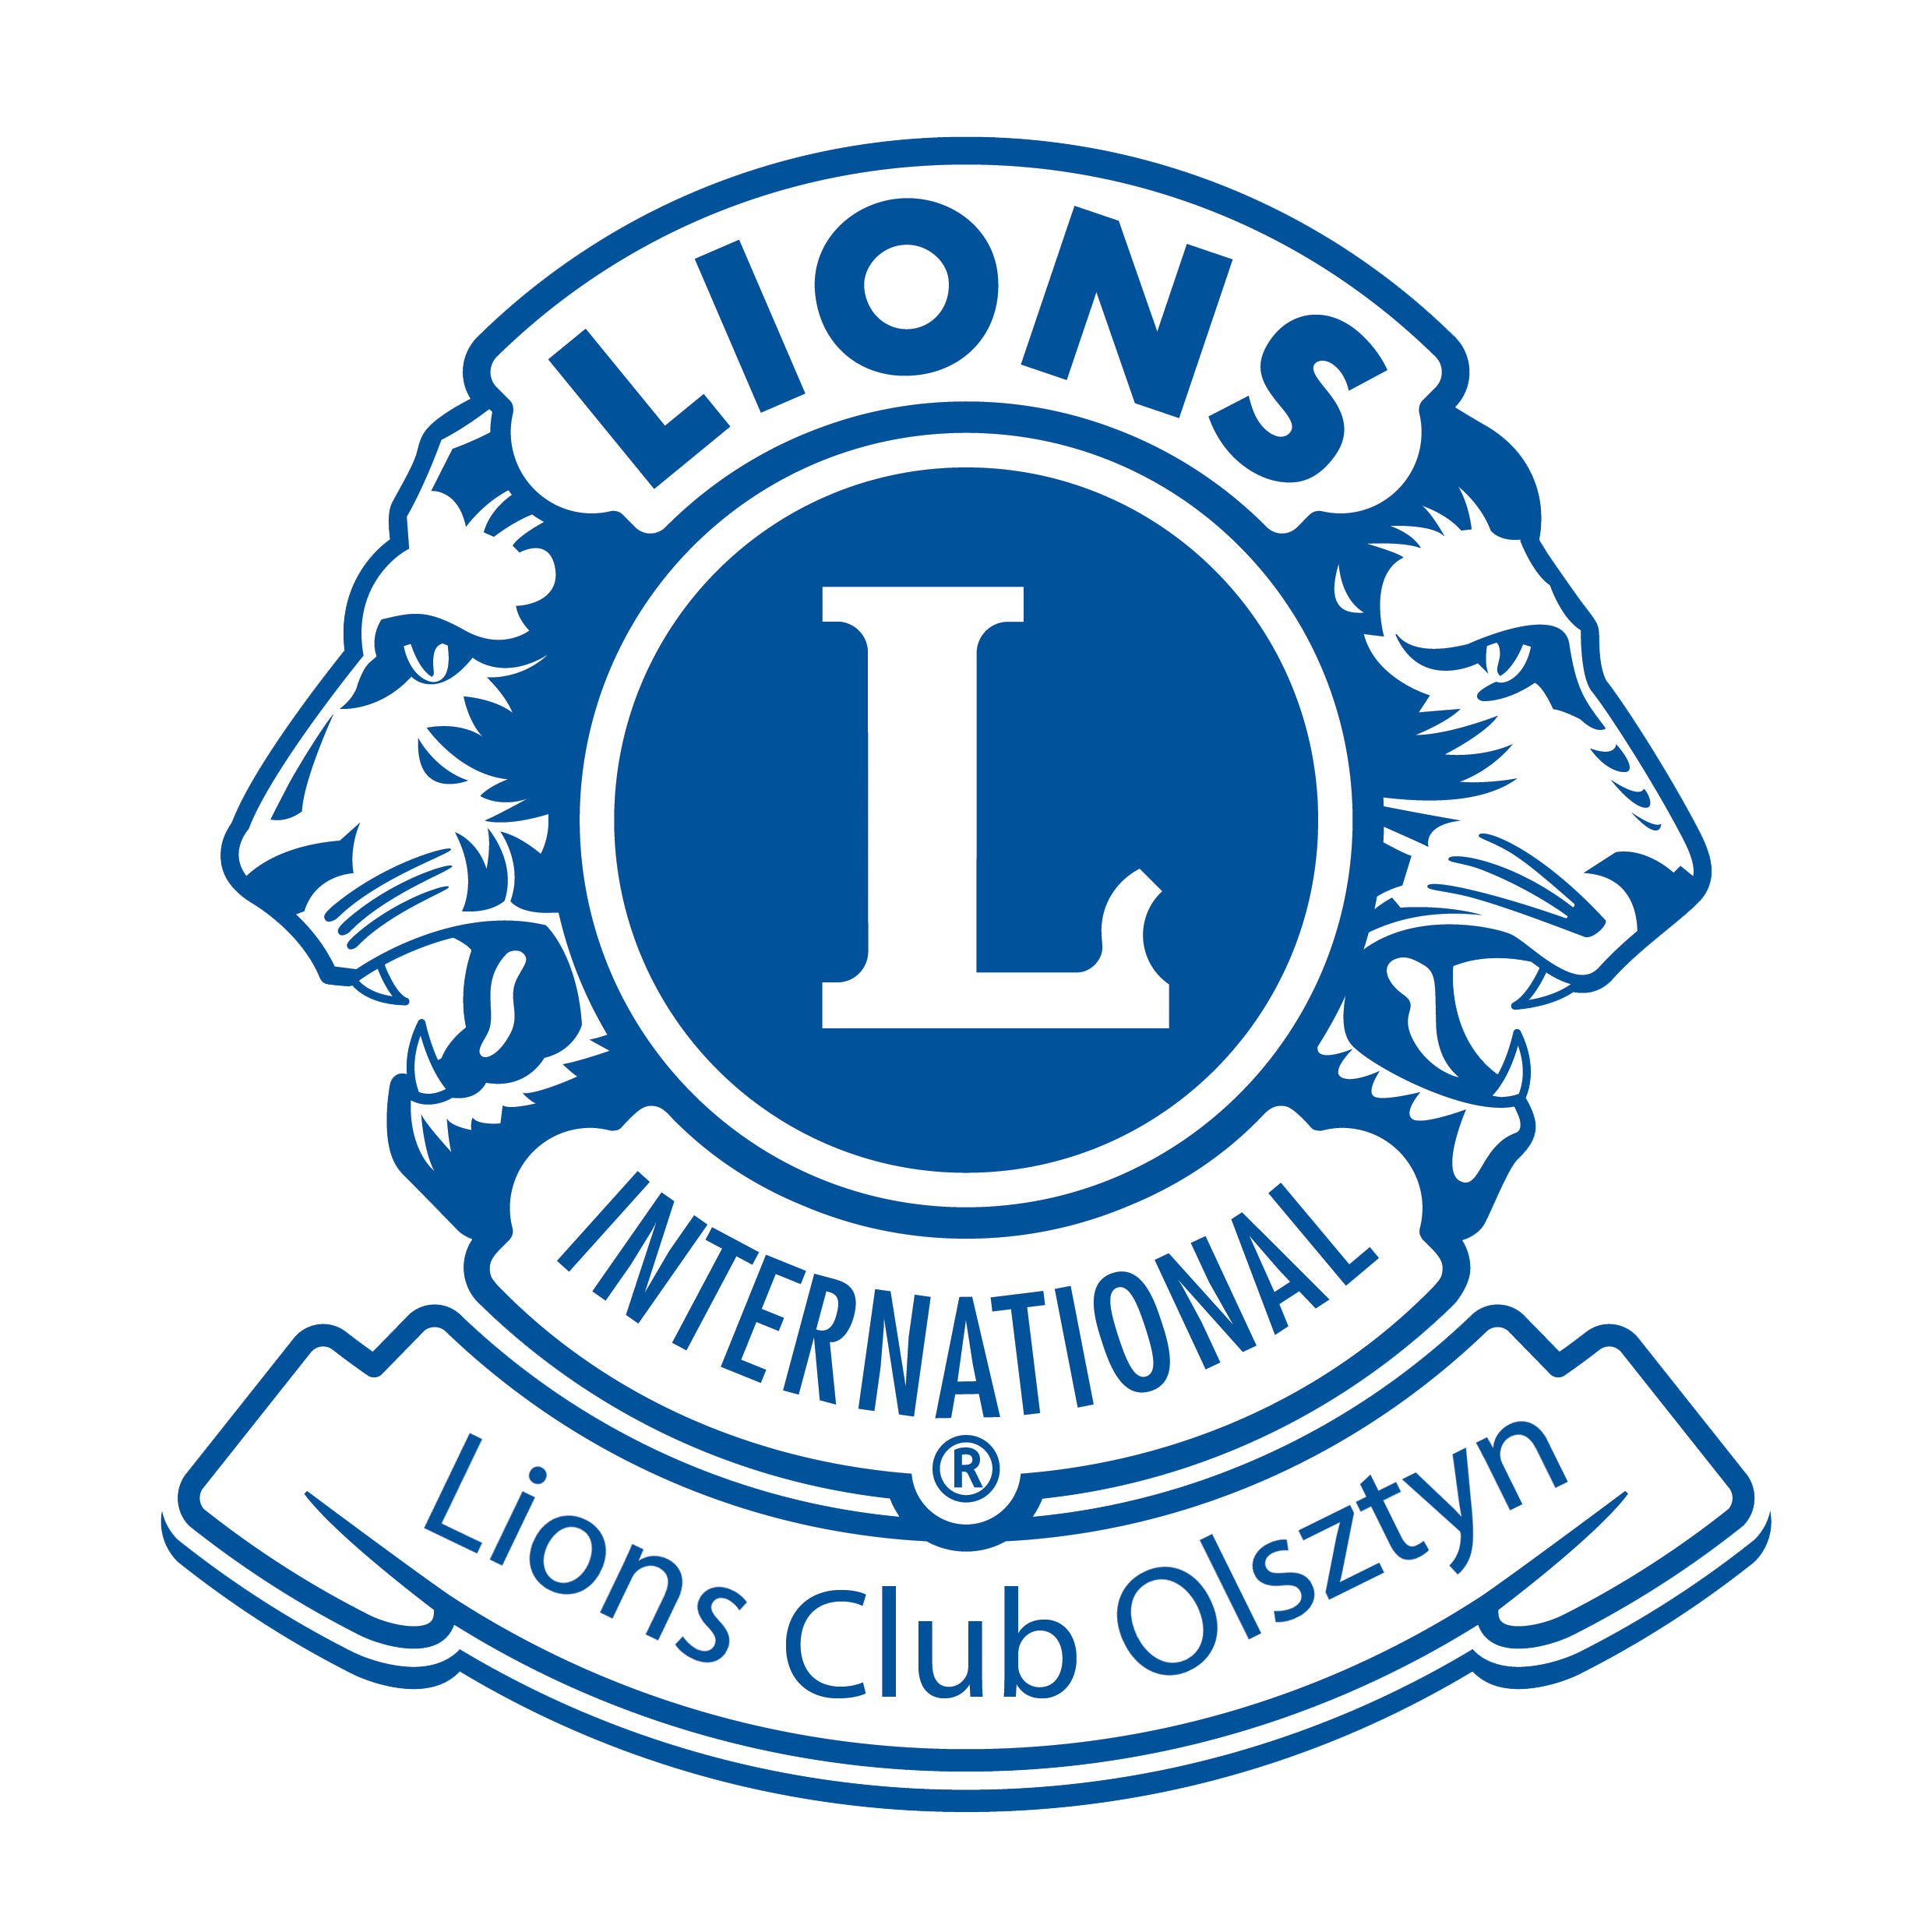 Lions Club Olsztyn